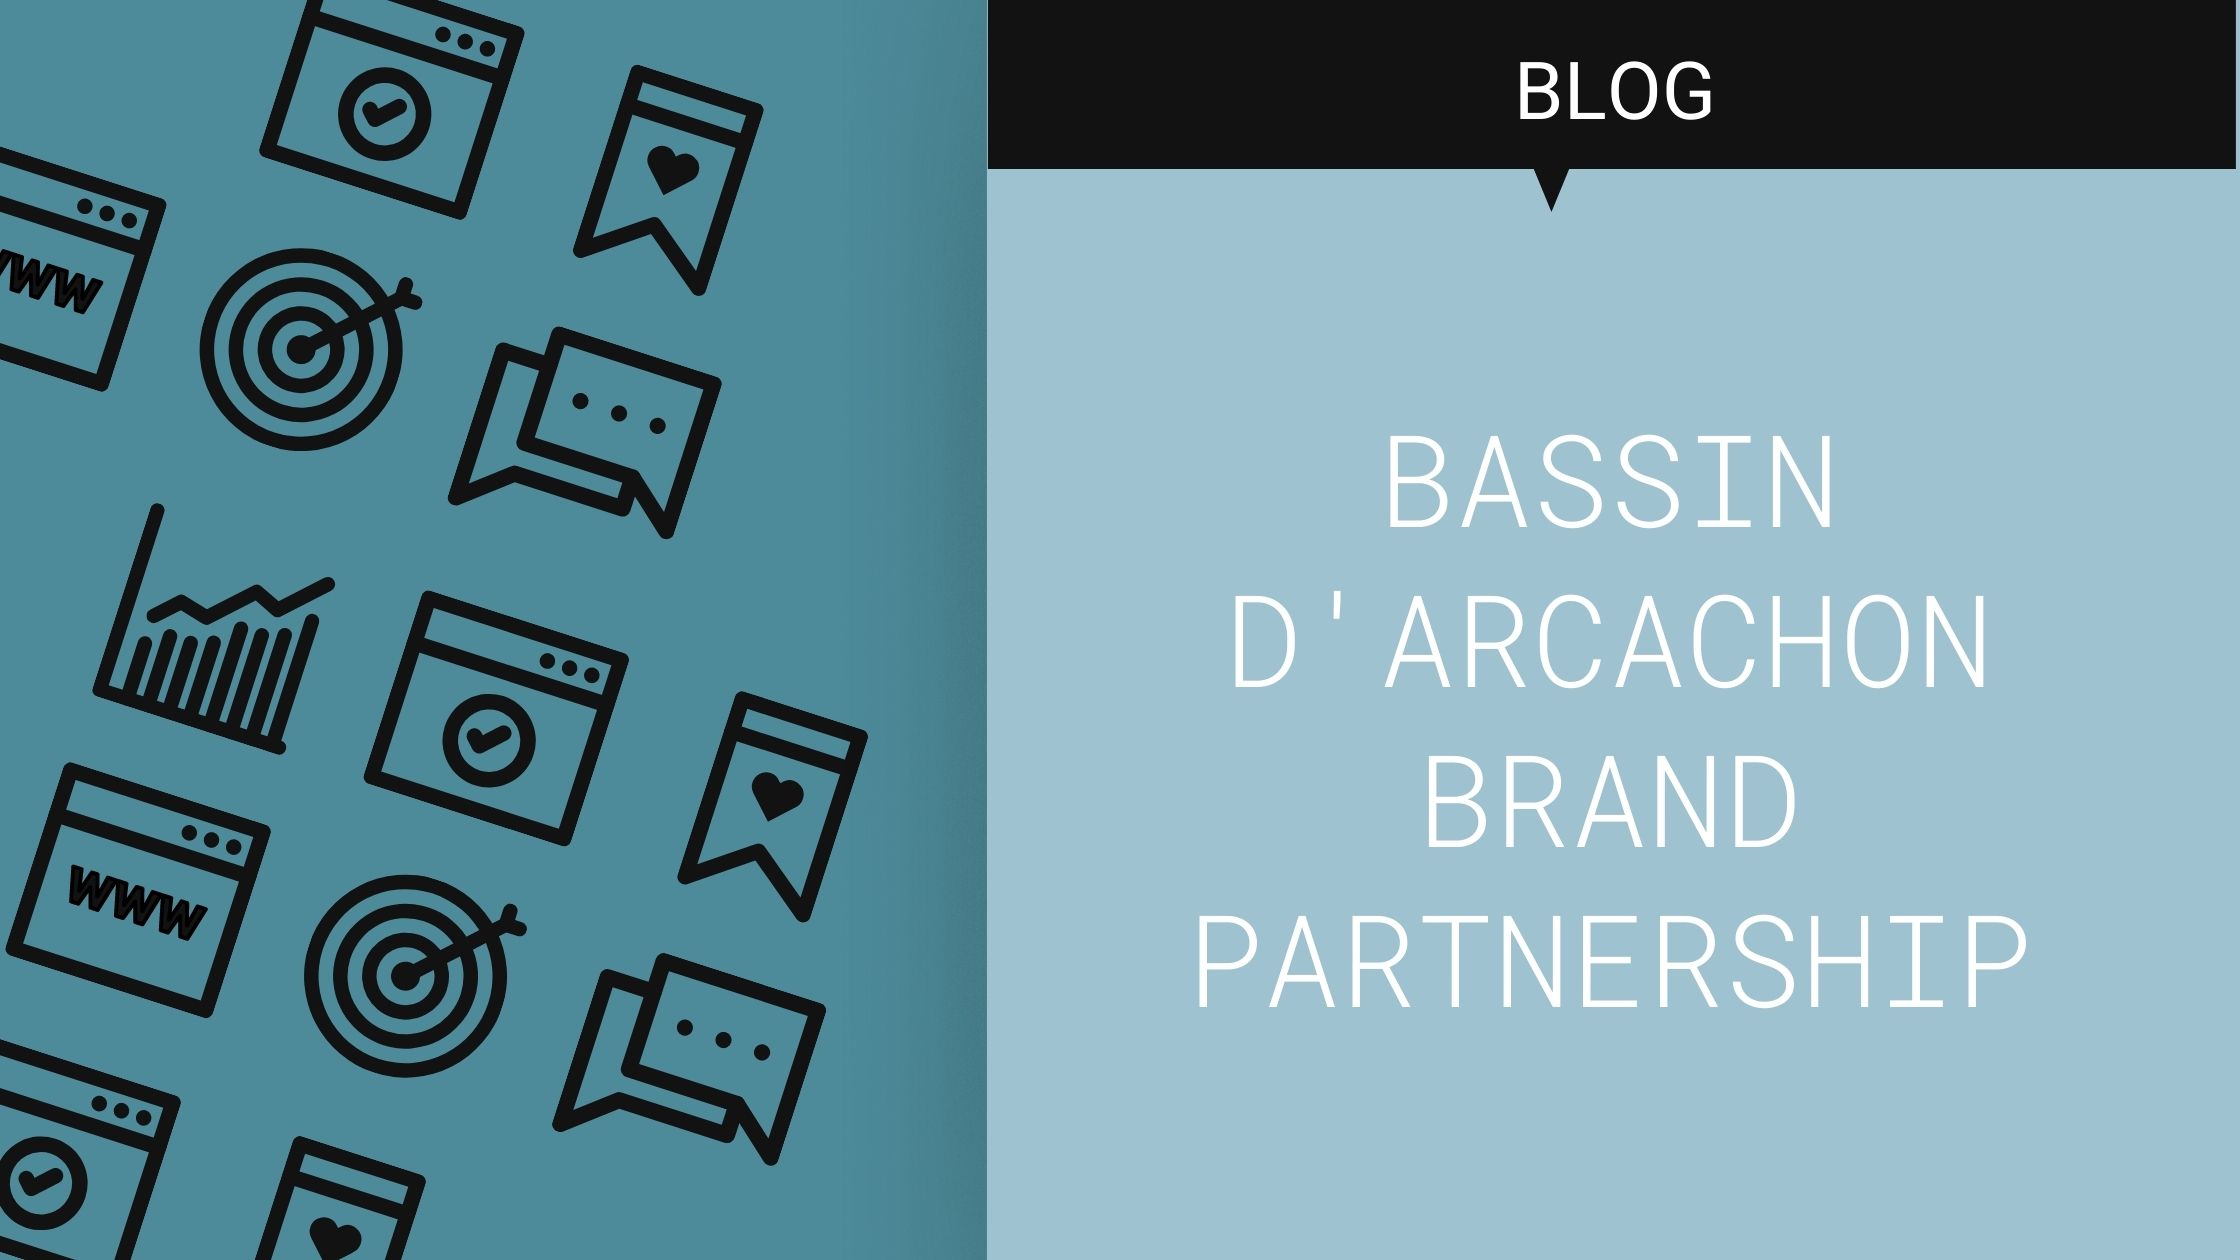 BA brand partnership